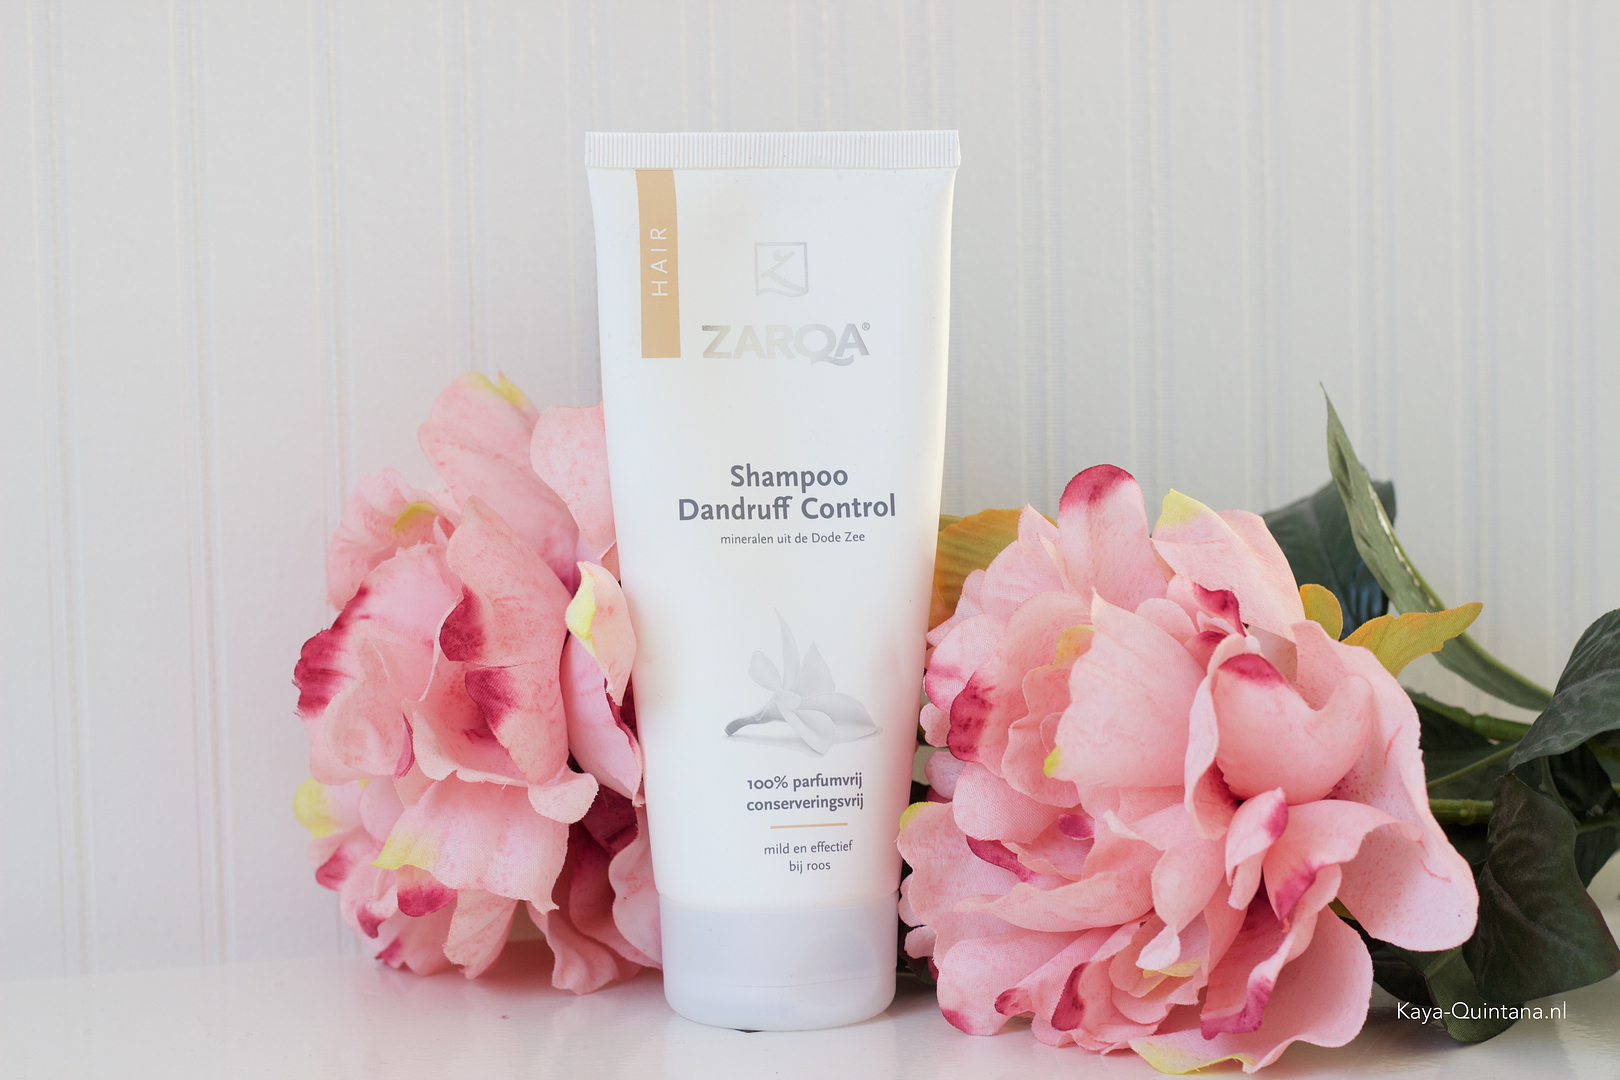 Zarqa Dandruff Control shampoo